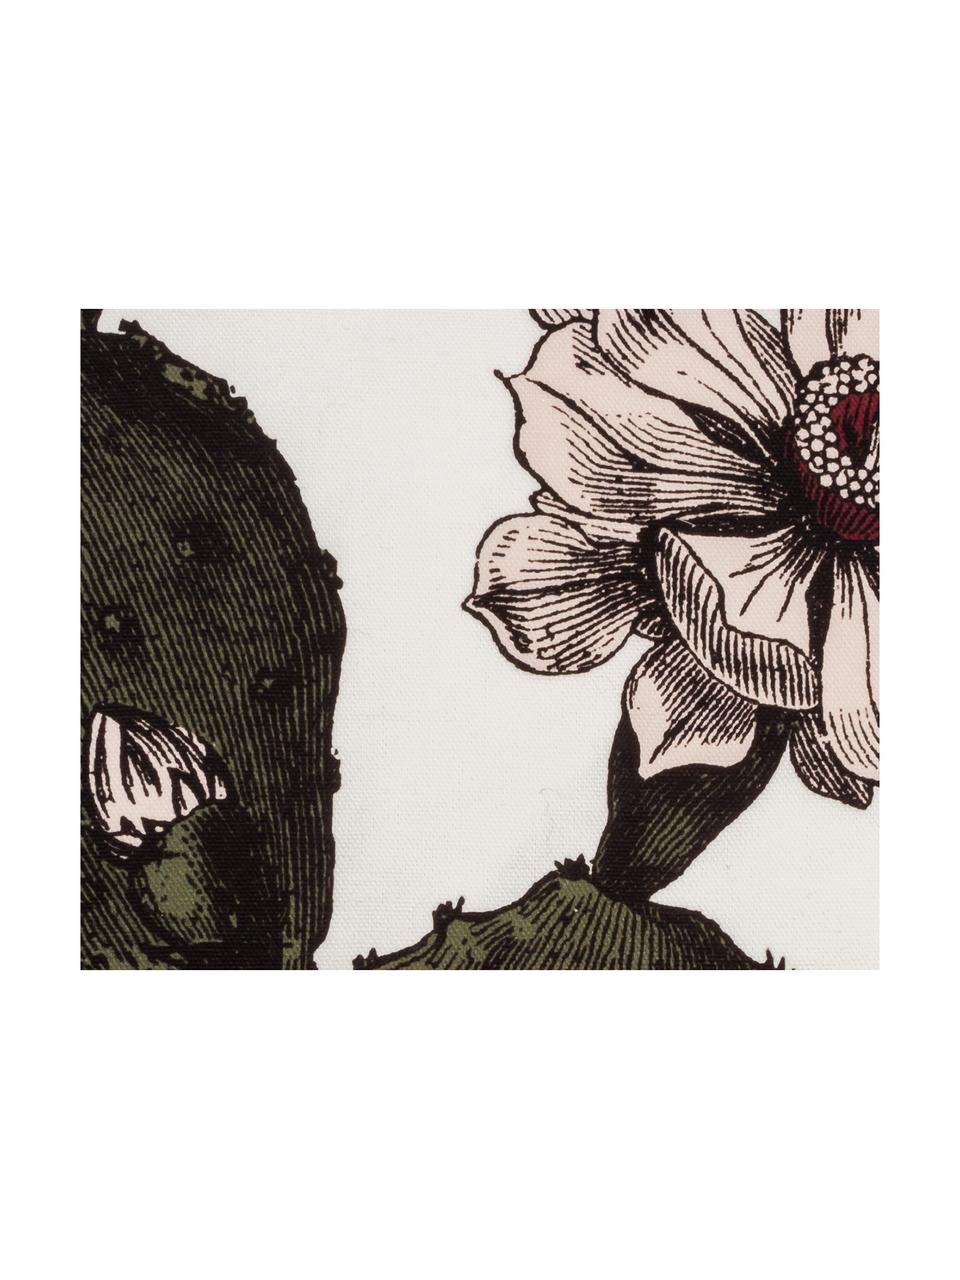 Dubbelzijdig kussen Desert Bloom, Wit, donkergroen, lichtroze, B 45 x L 45 cm